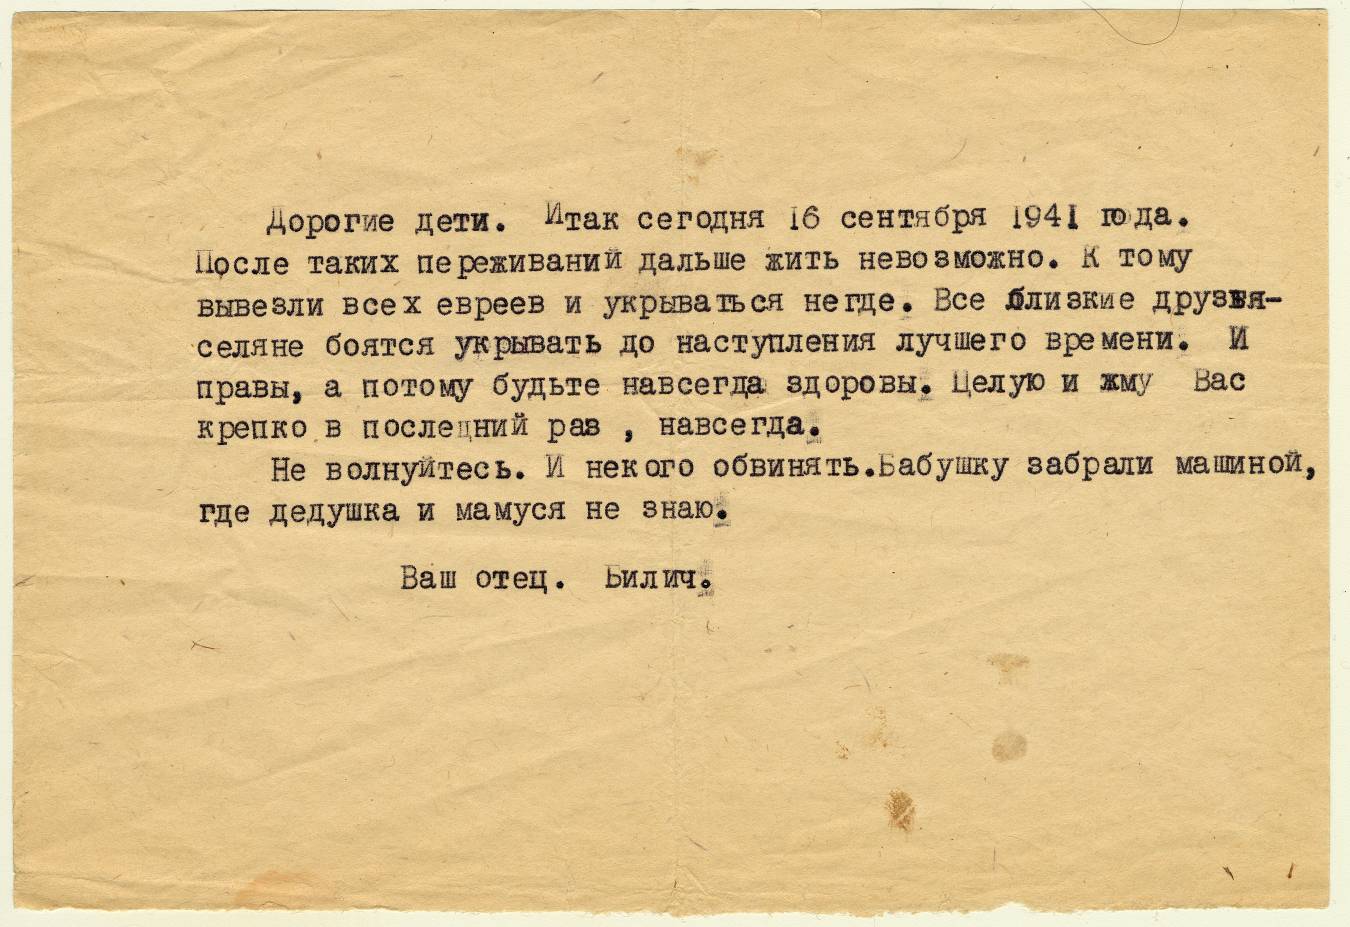 Letter from Billich, Sept. 19, 1941.